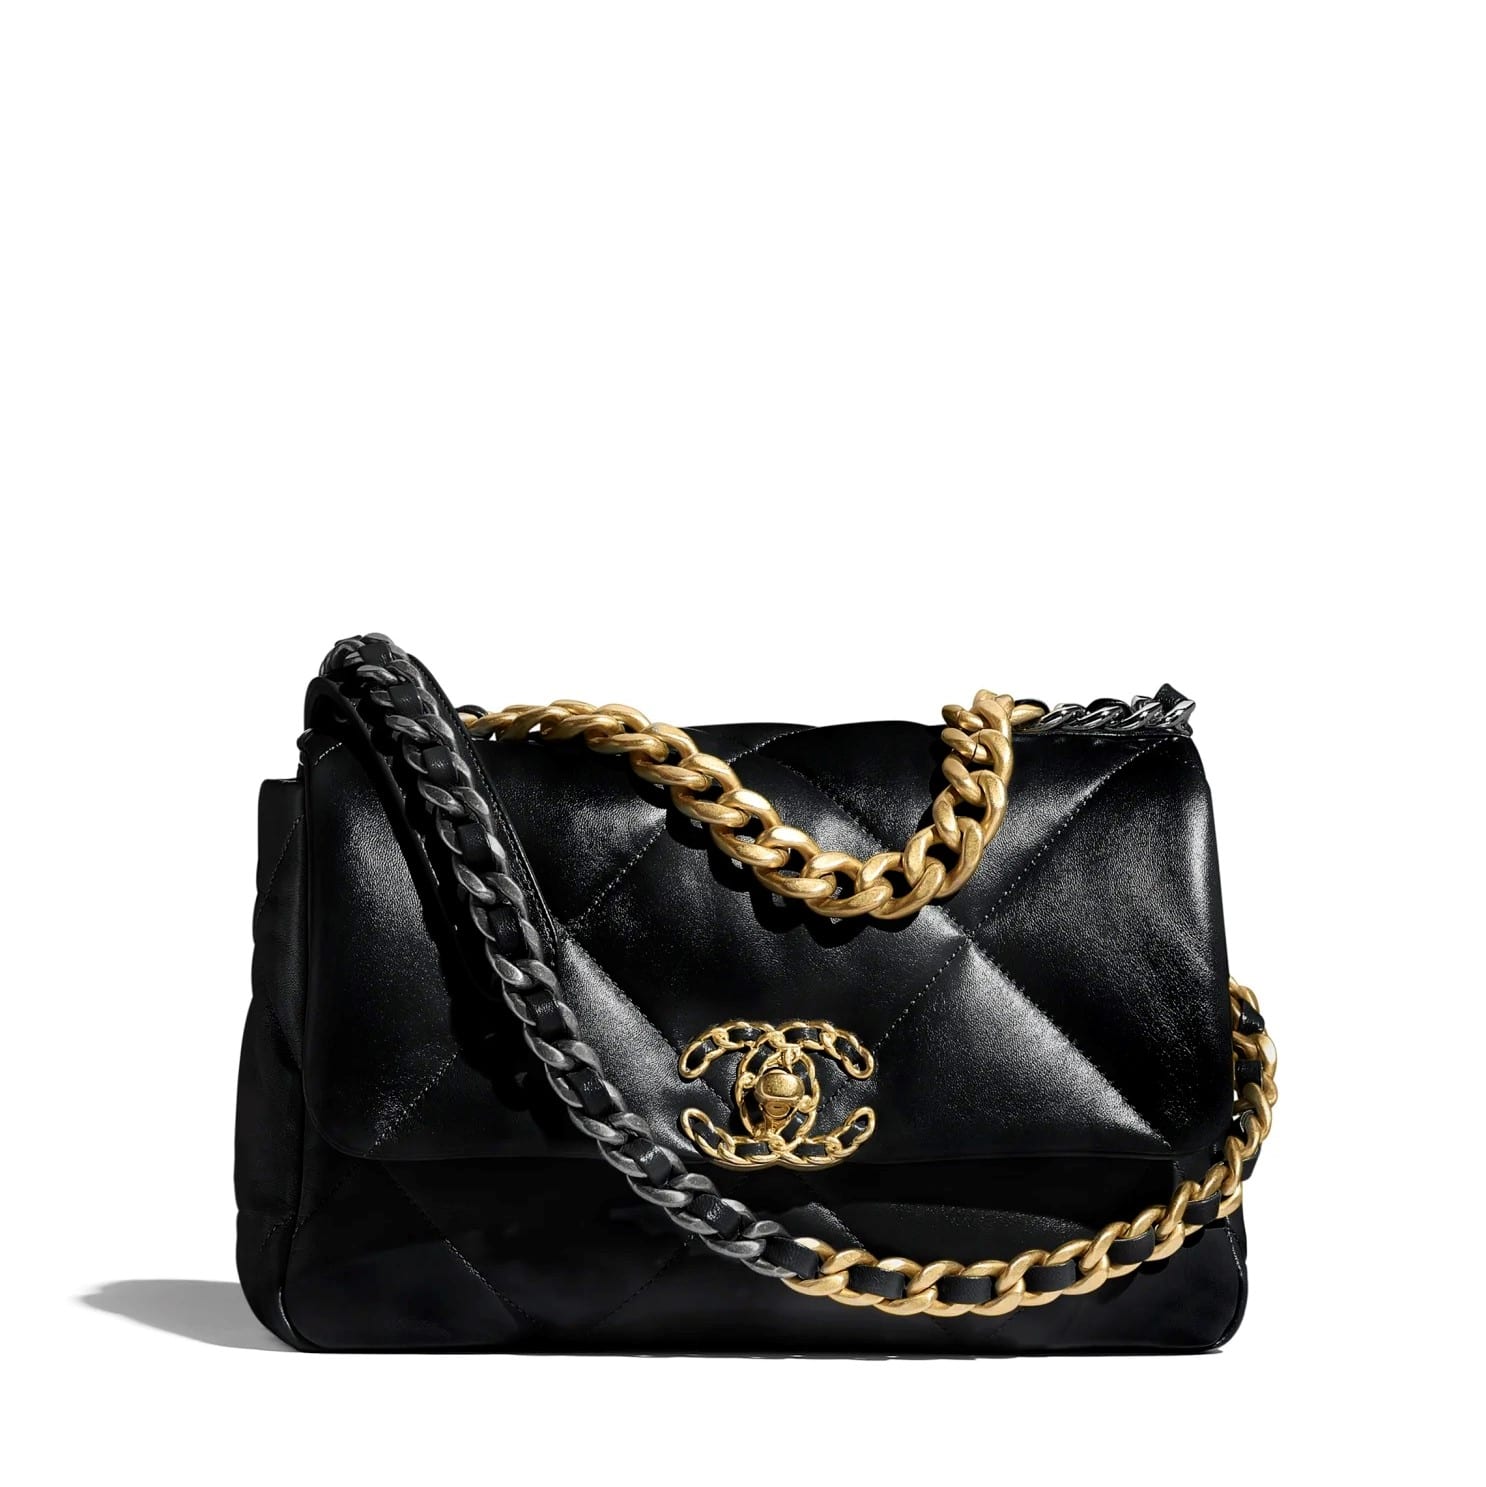 Chanel 19 Black Lambskin Handbag